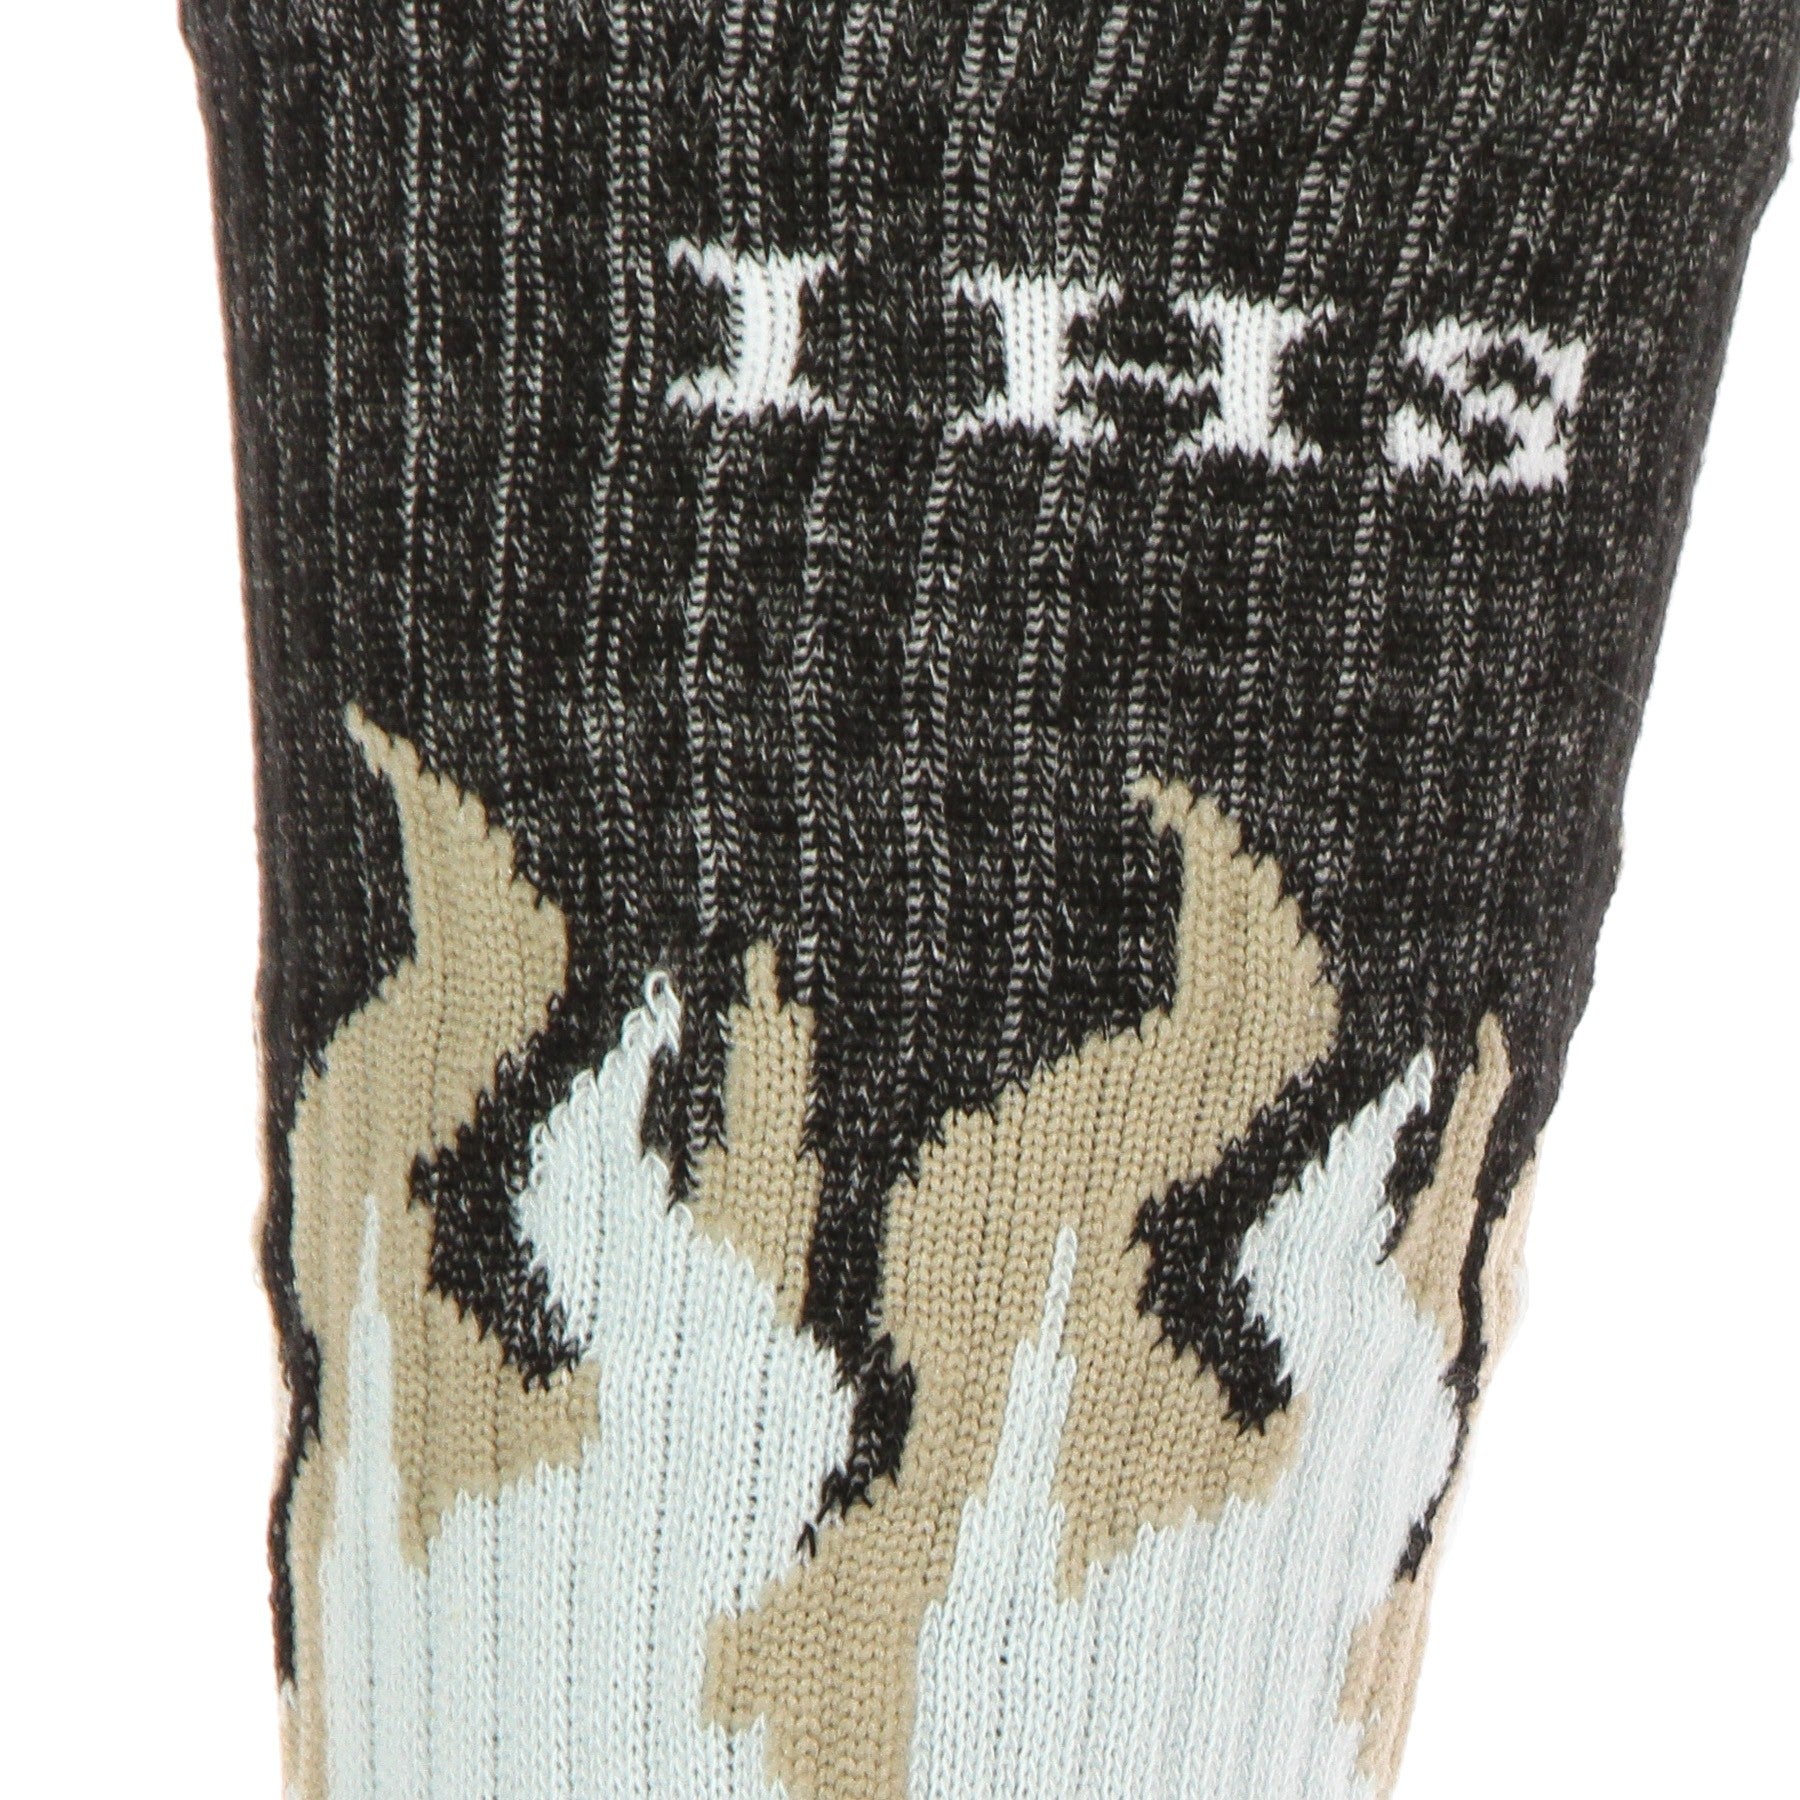 Ihs, Calza Media Uomo New Flames Socks, 